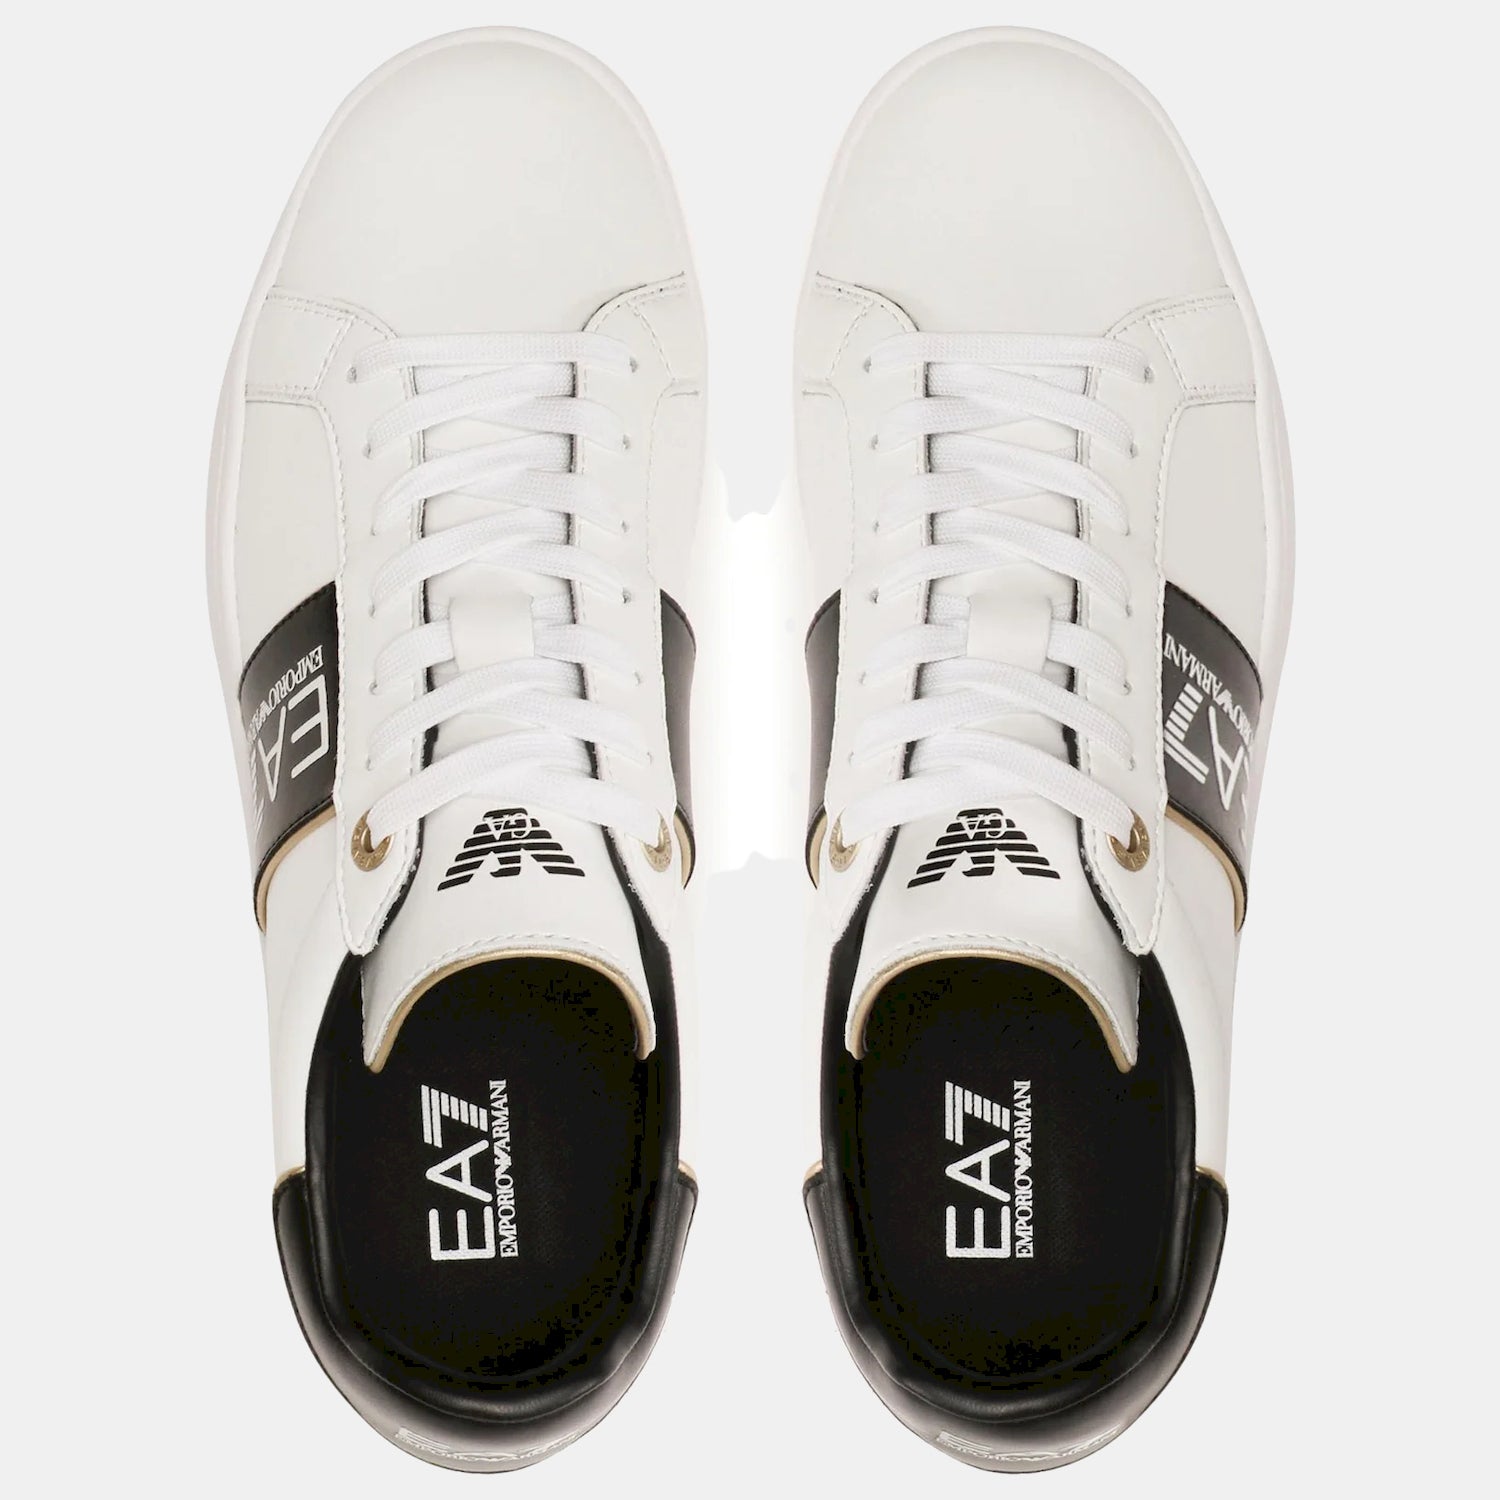 Emporio Armani Ea7 Sapatilhas Sneakers Shoes X8x102 Xk346 Whi Black Branco Preto_shot4